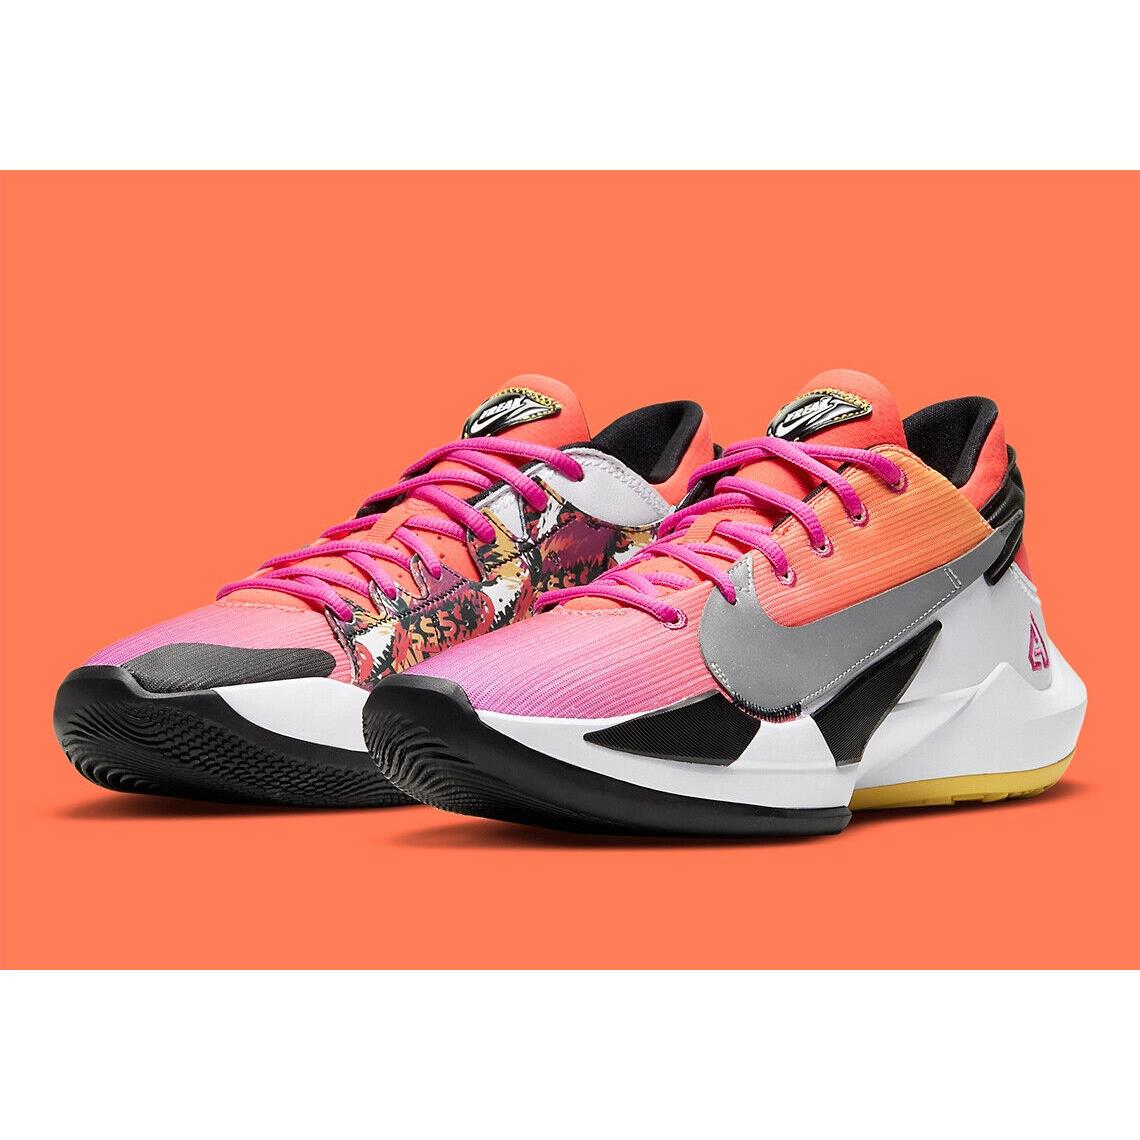 Nike shoes FREAK - Bright Crimson/Fire Pink/White/Black 4